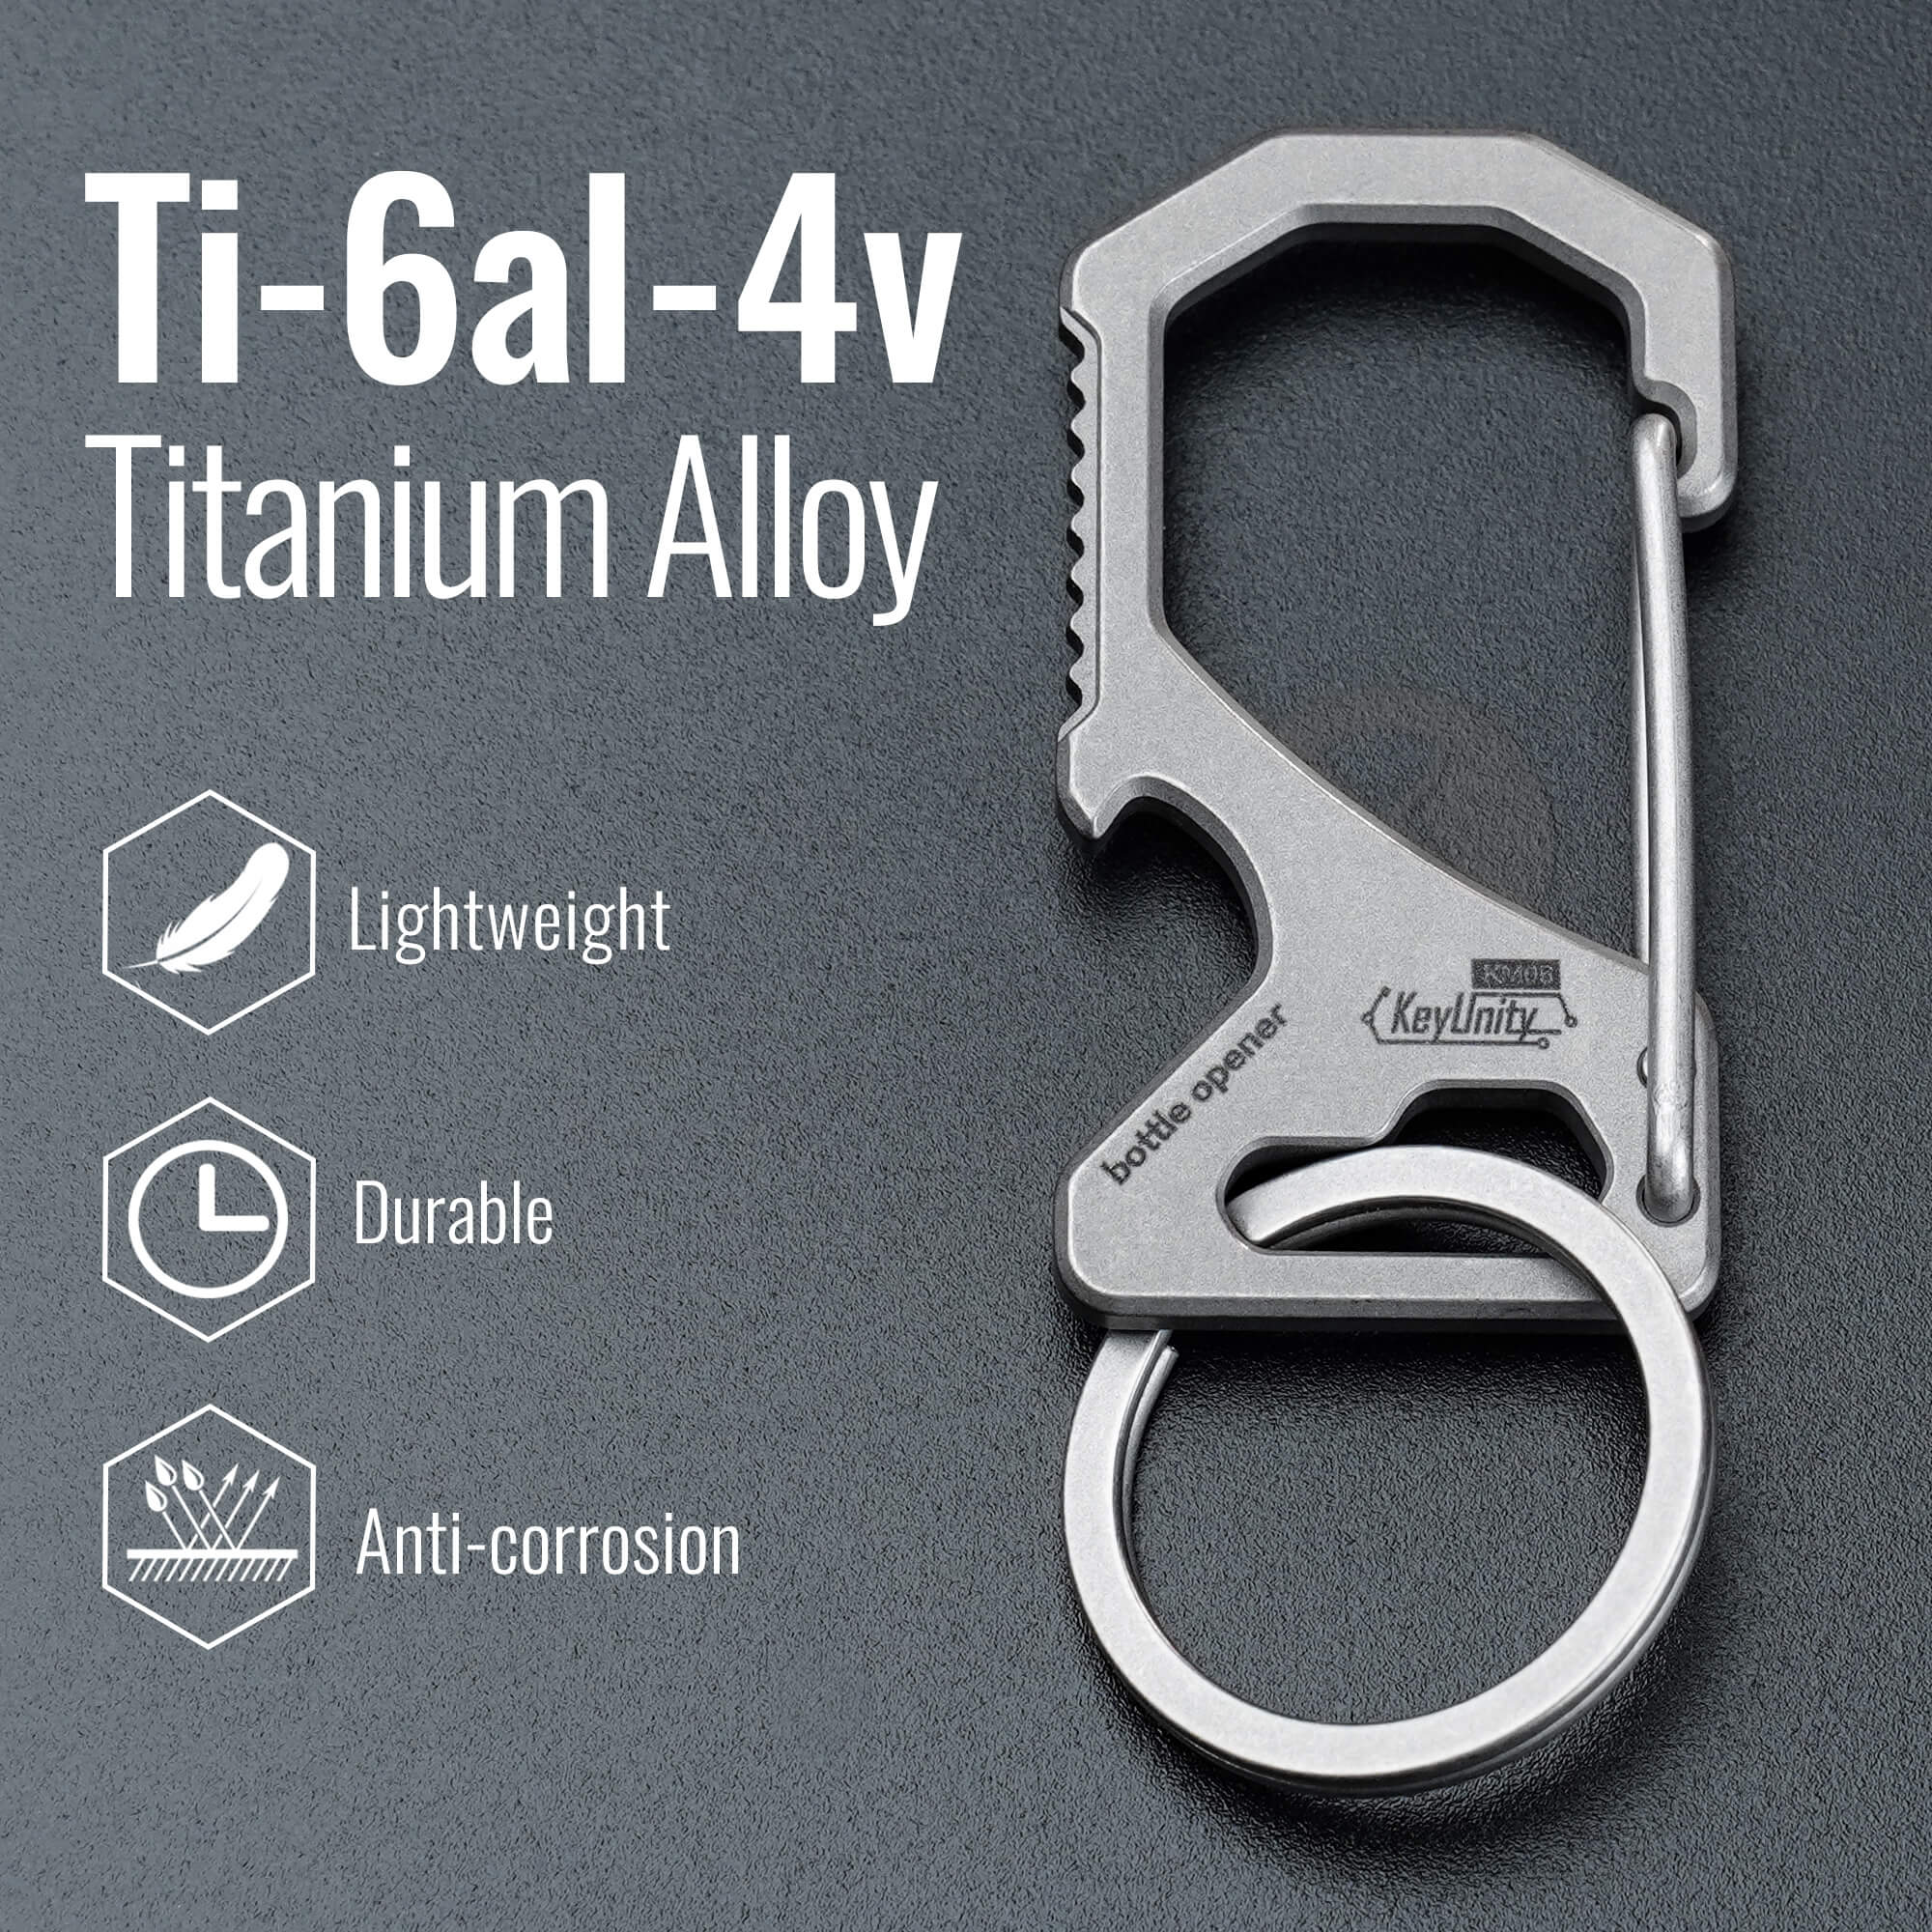 Unlock a Convenient Life with the KeyUnity KM05 Titanium Carabiner: Lightweight, Practical, Durable!